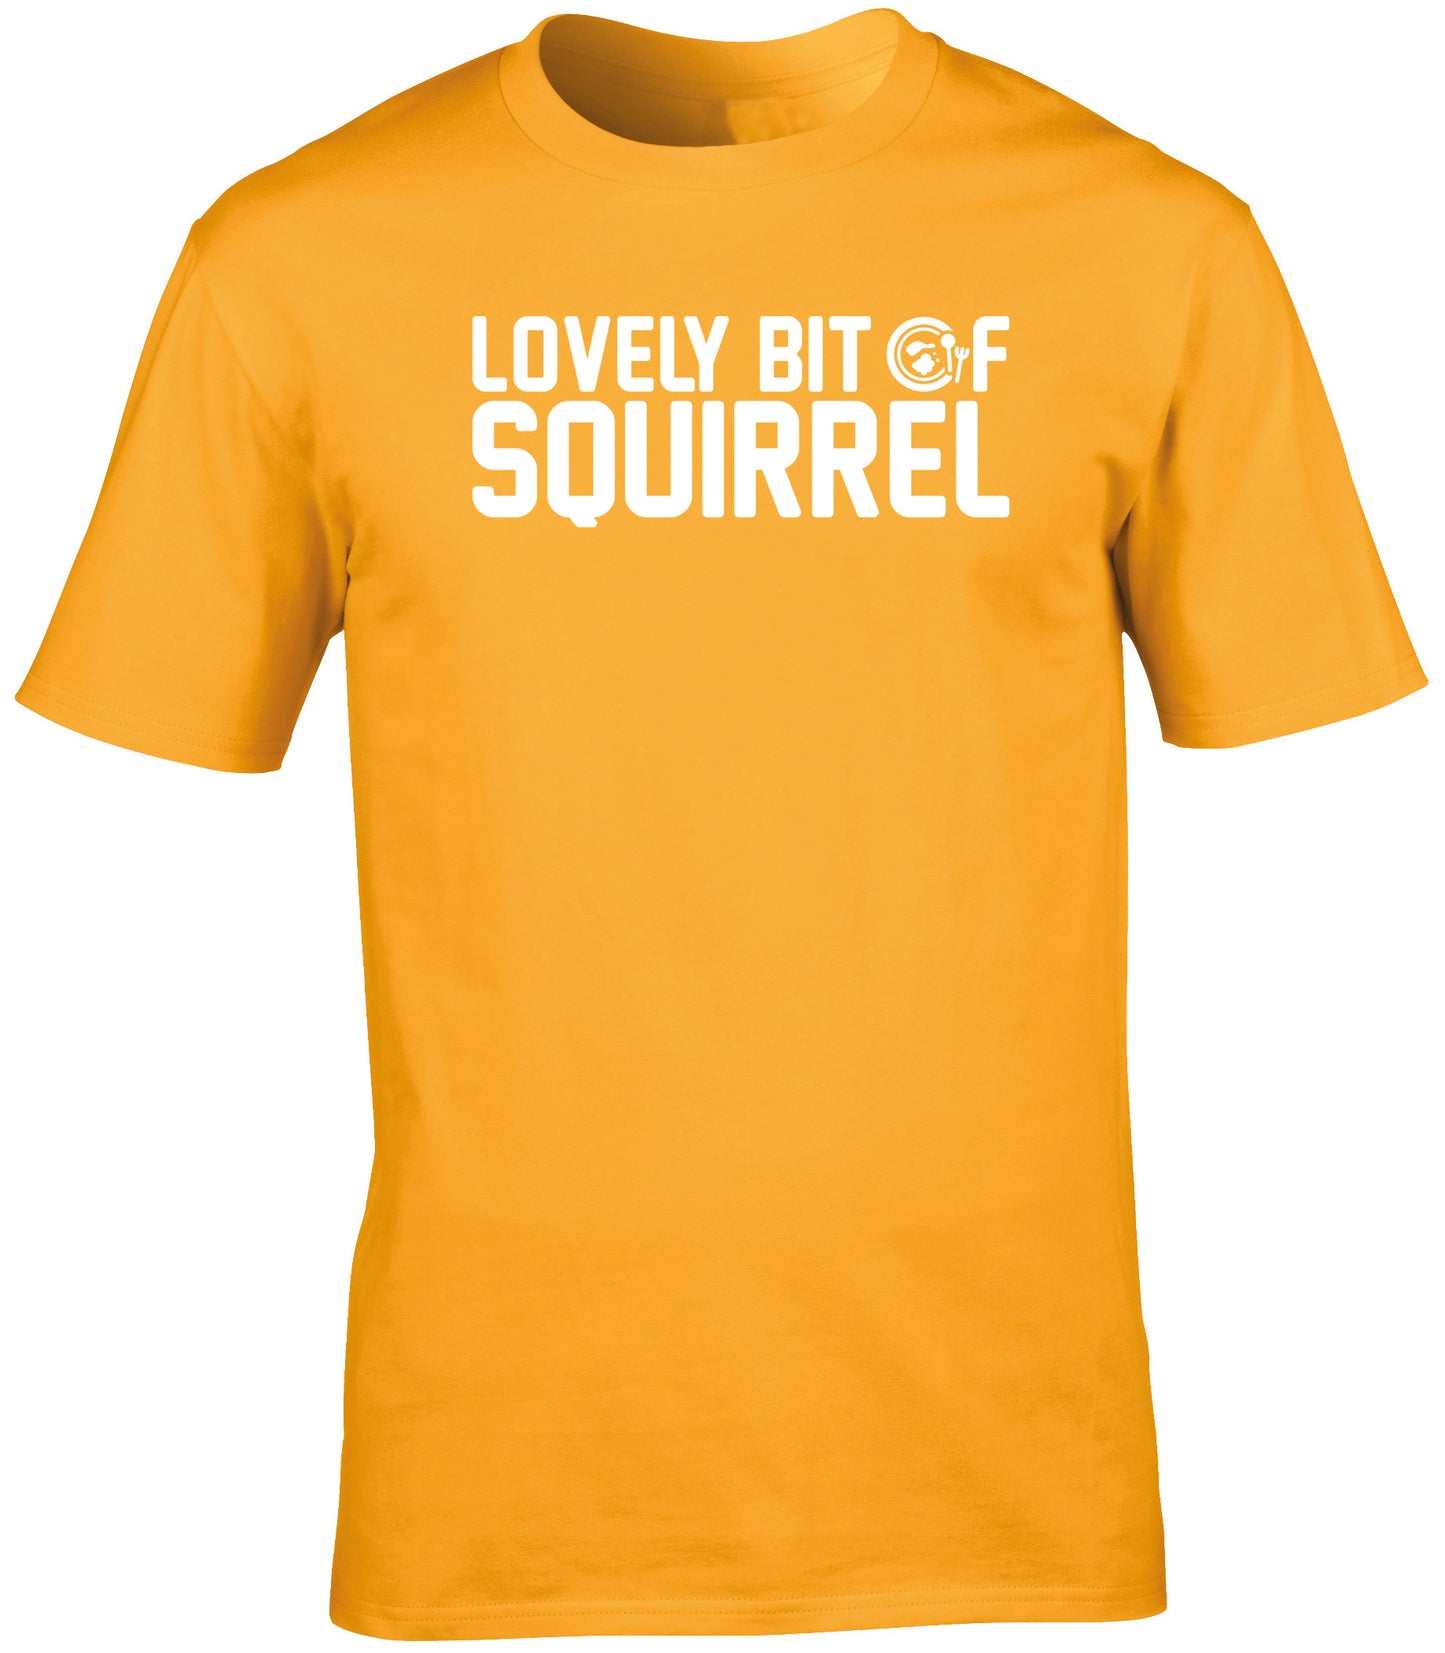 Lovely bit of squirrel unisex t-shirt